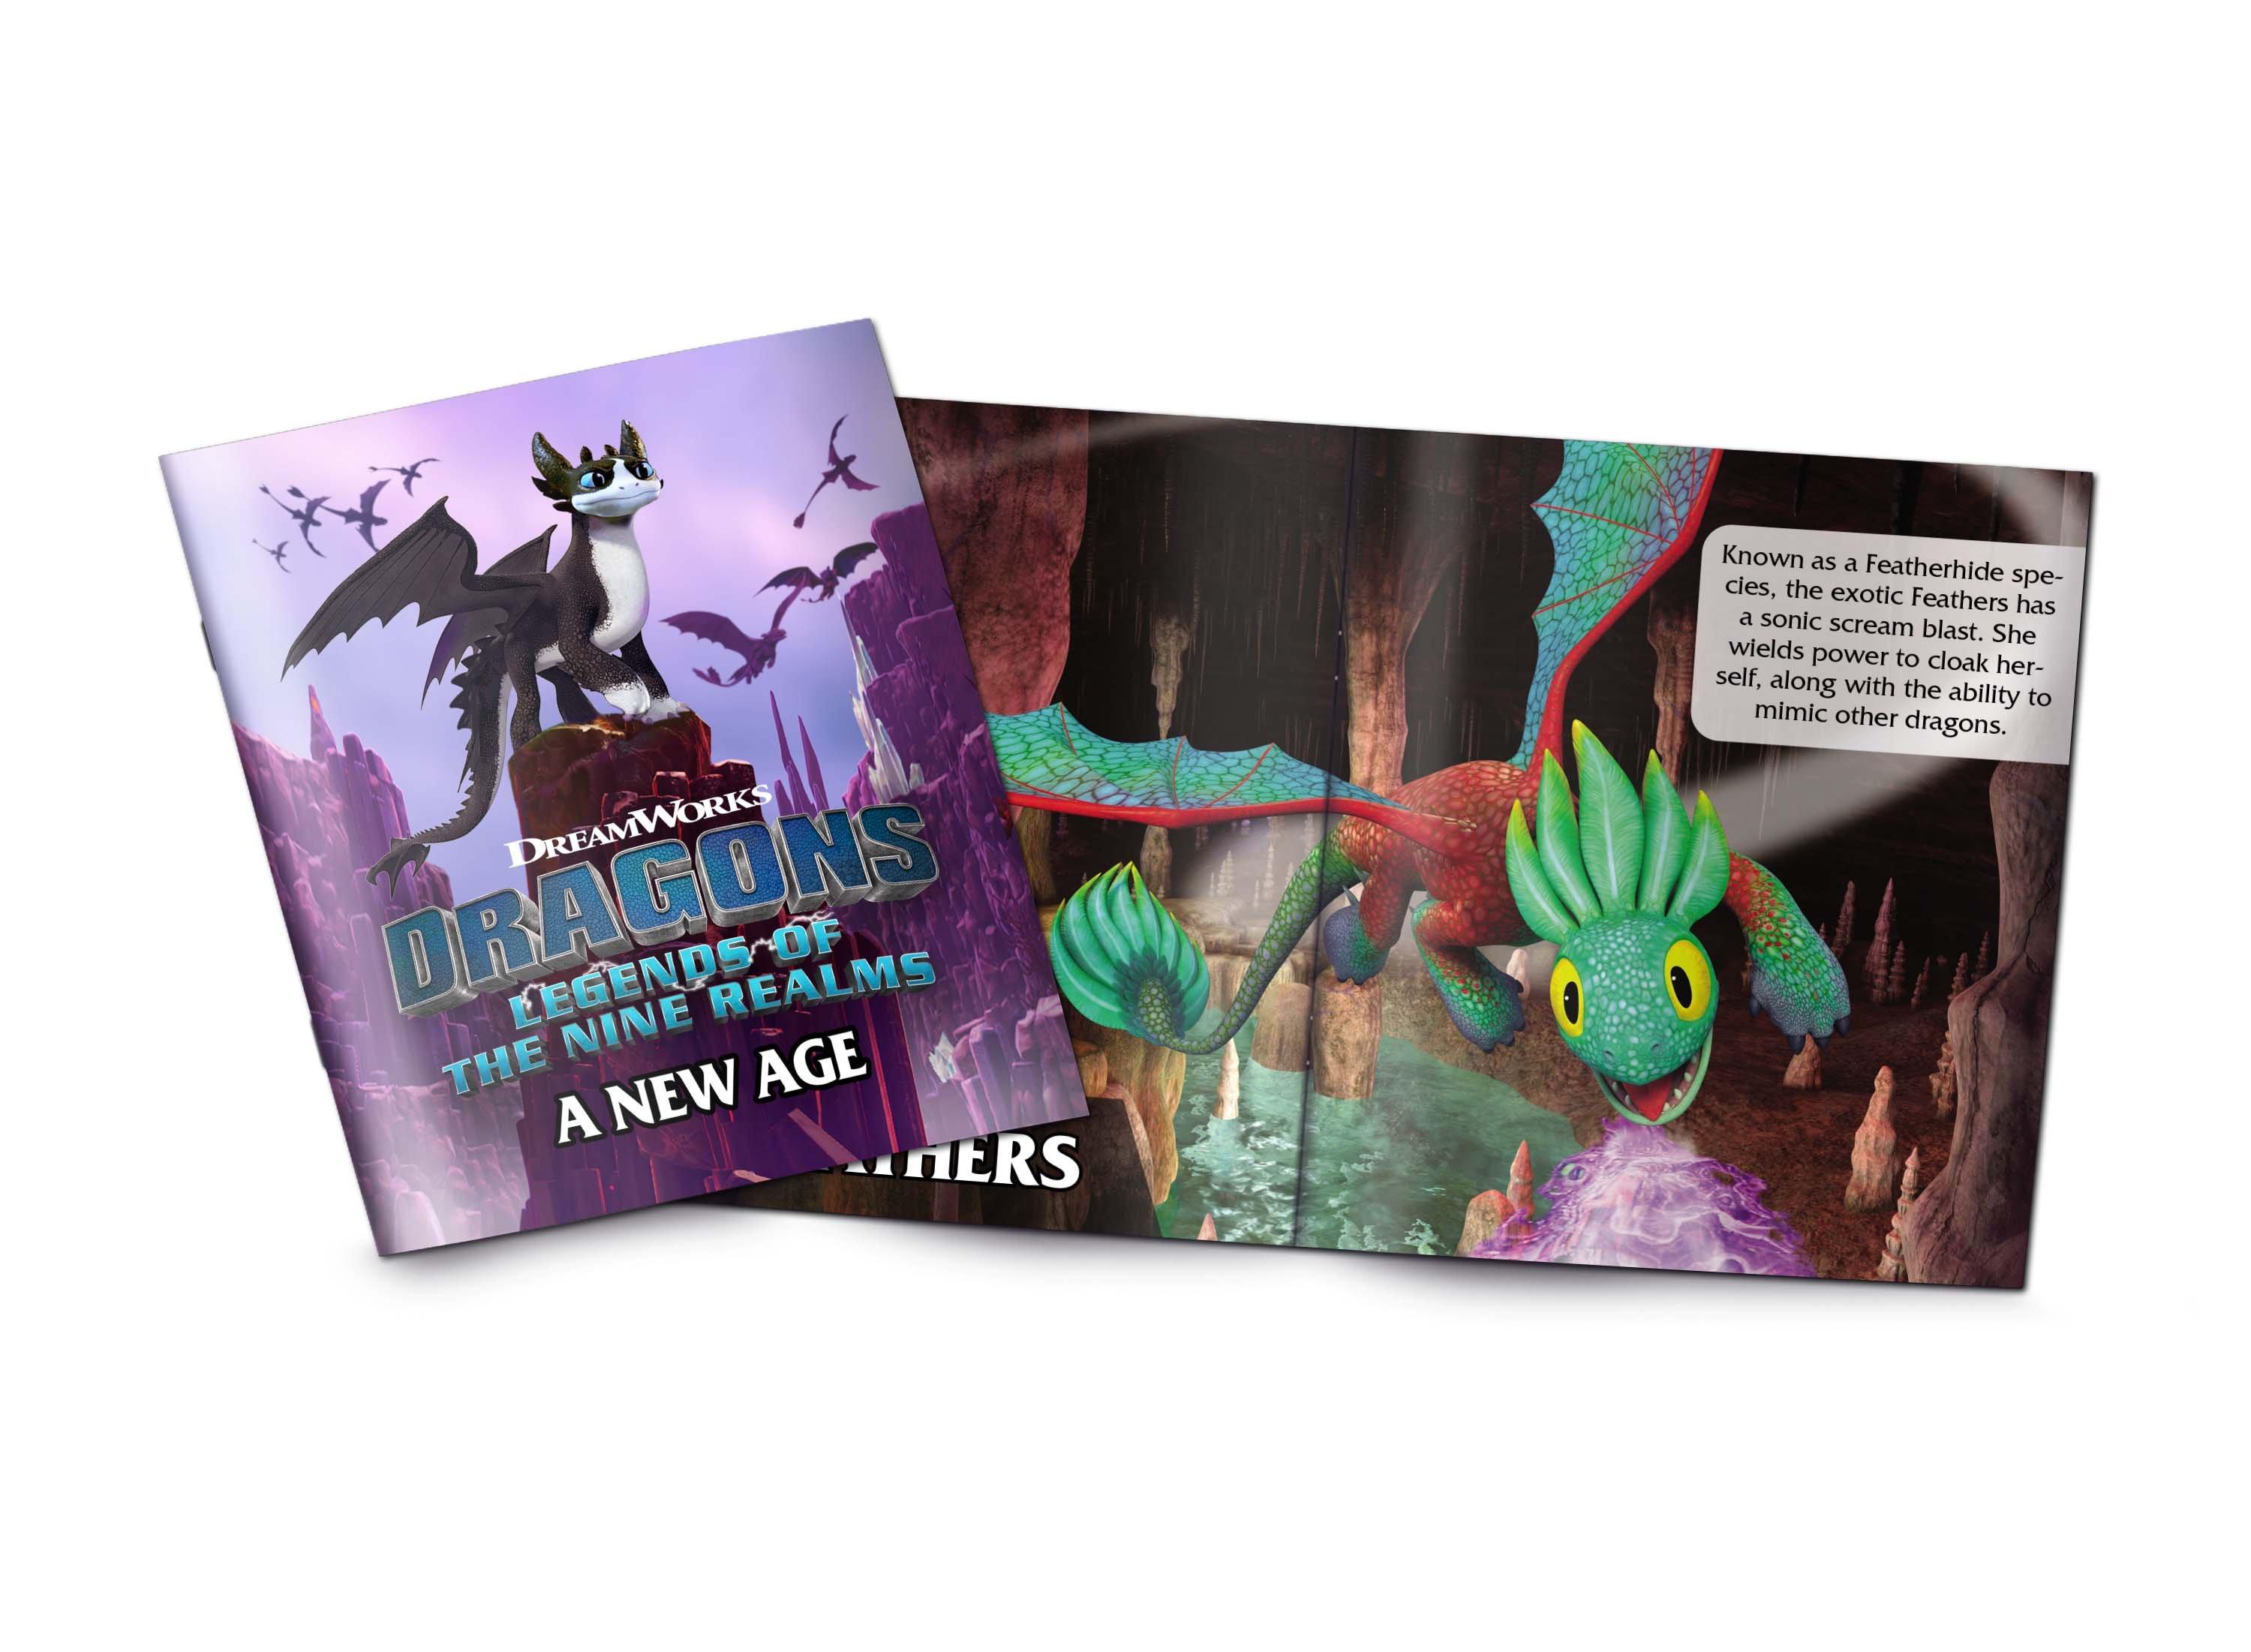 DreamWorks Dragões: Lendas dos Nove Reinos, Xbox One / Xbox Series X, S